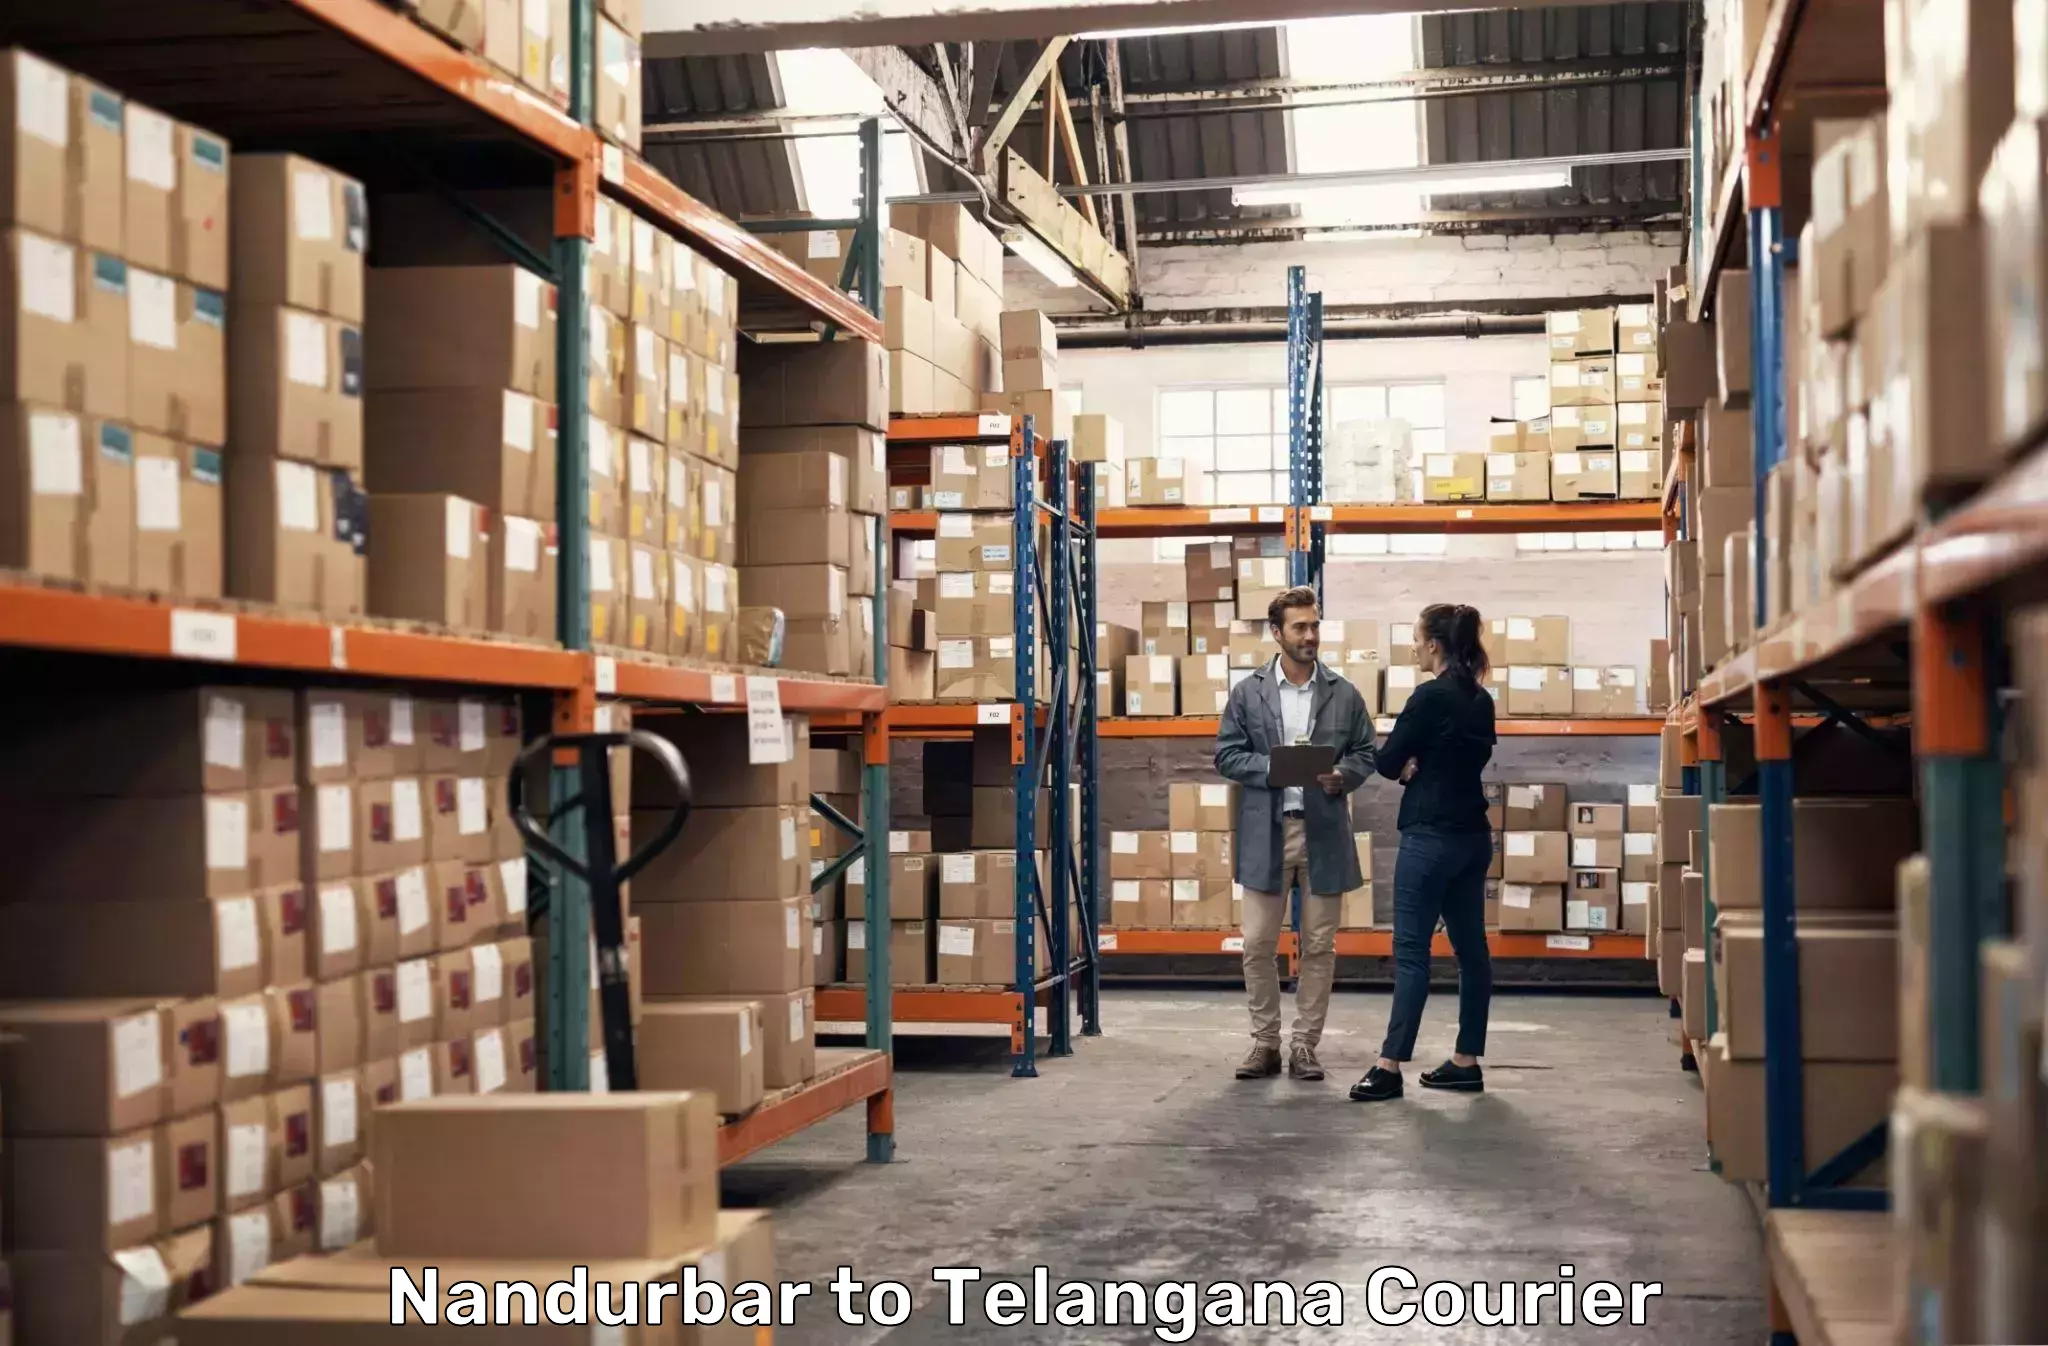 Courier service comparison Nandurbar to Medchal